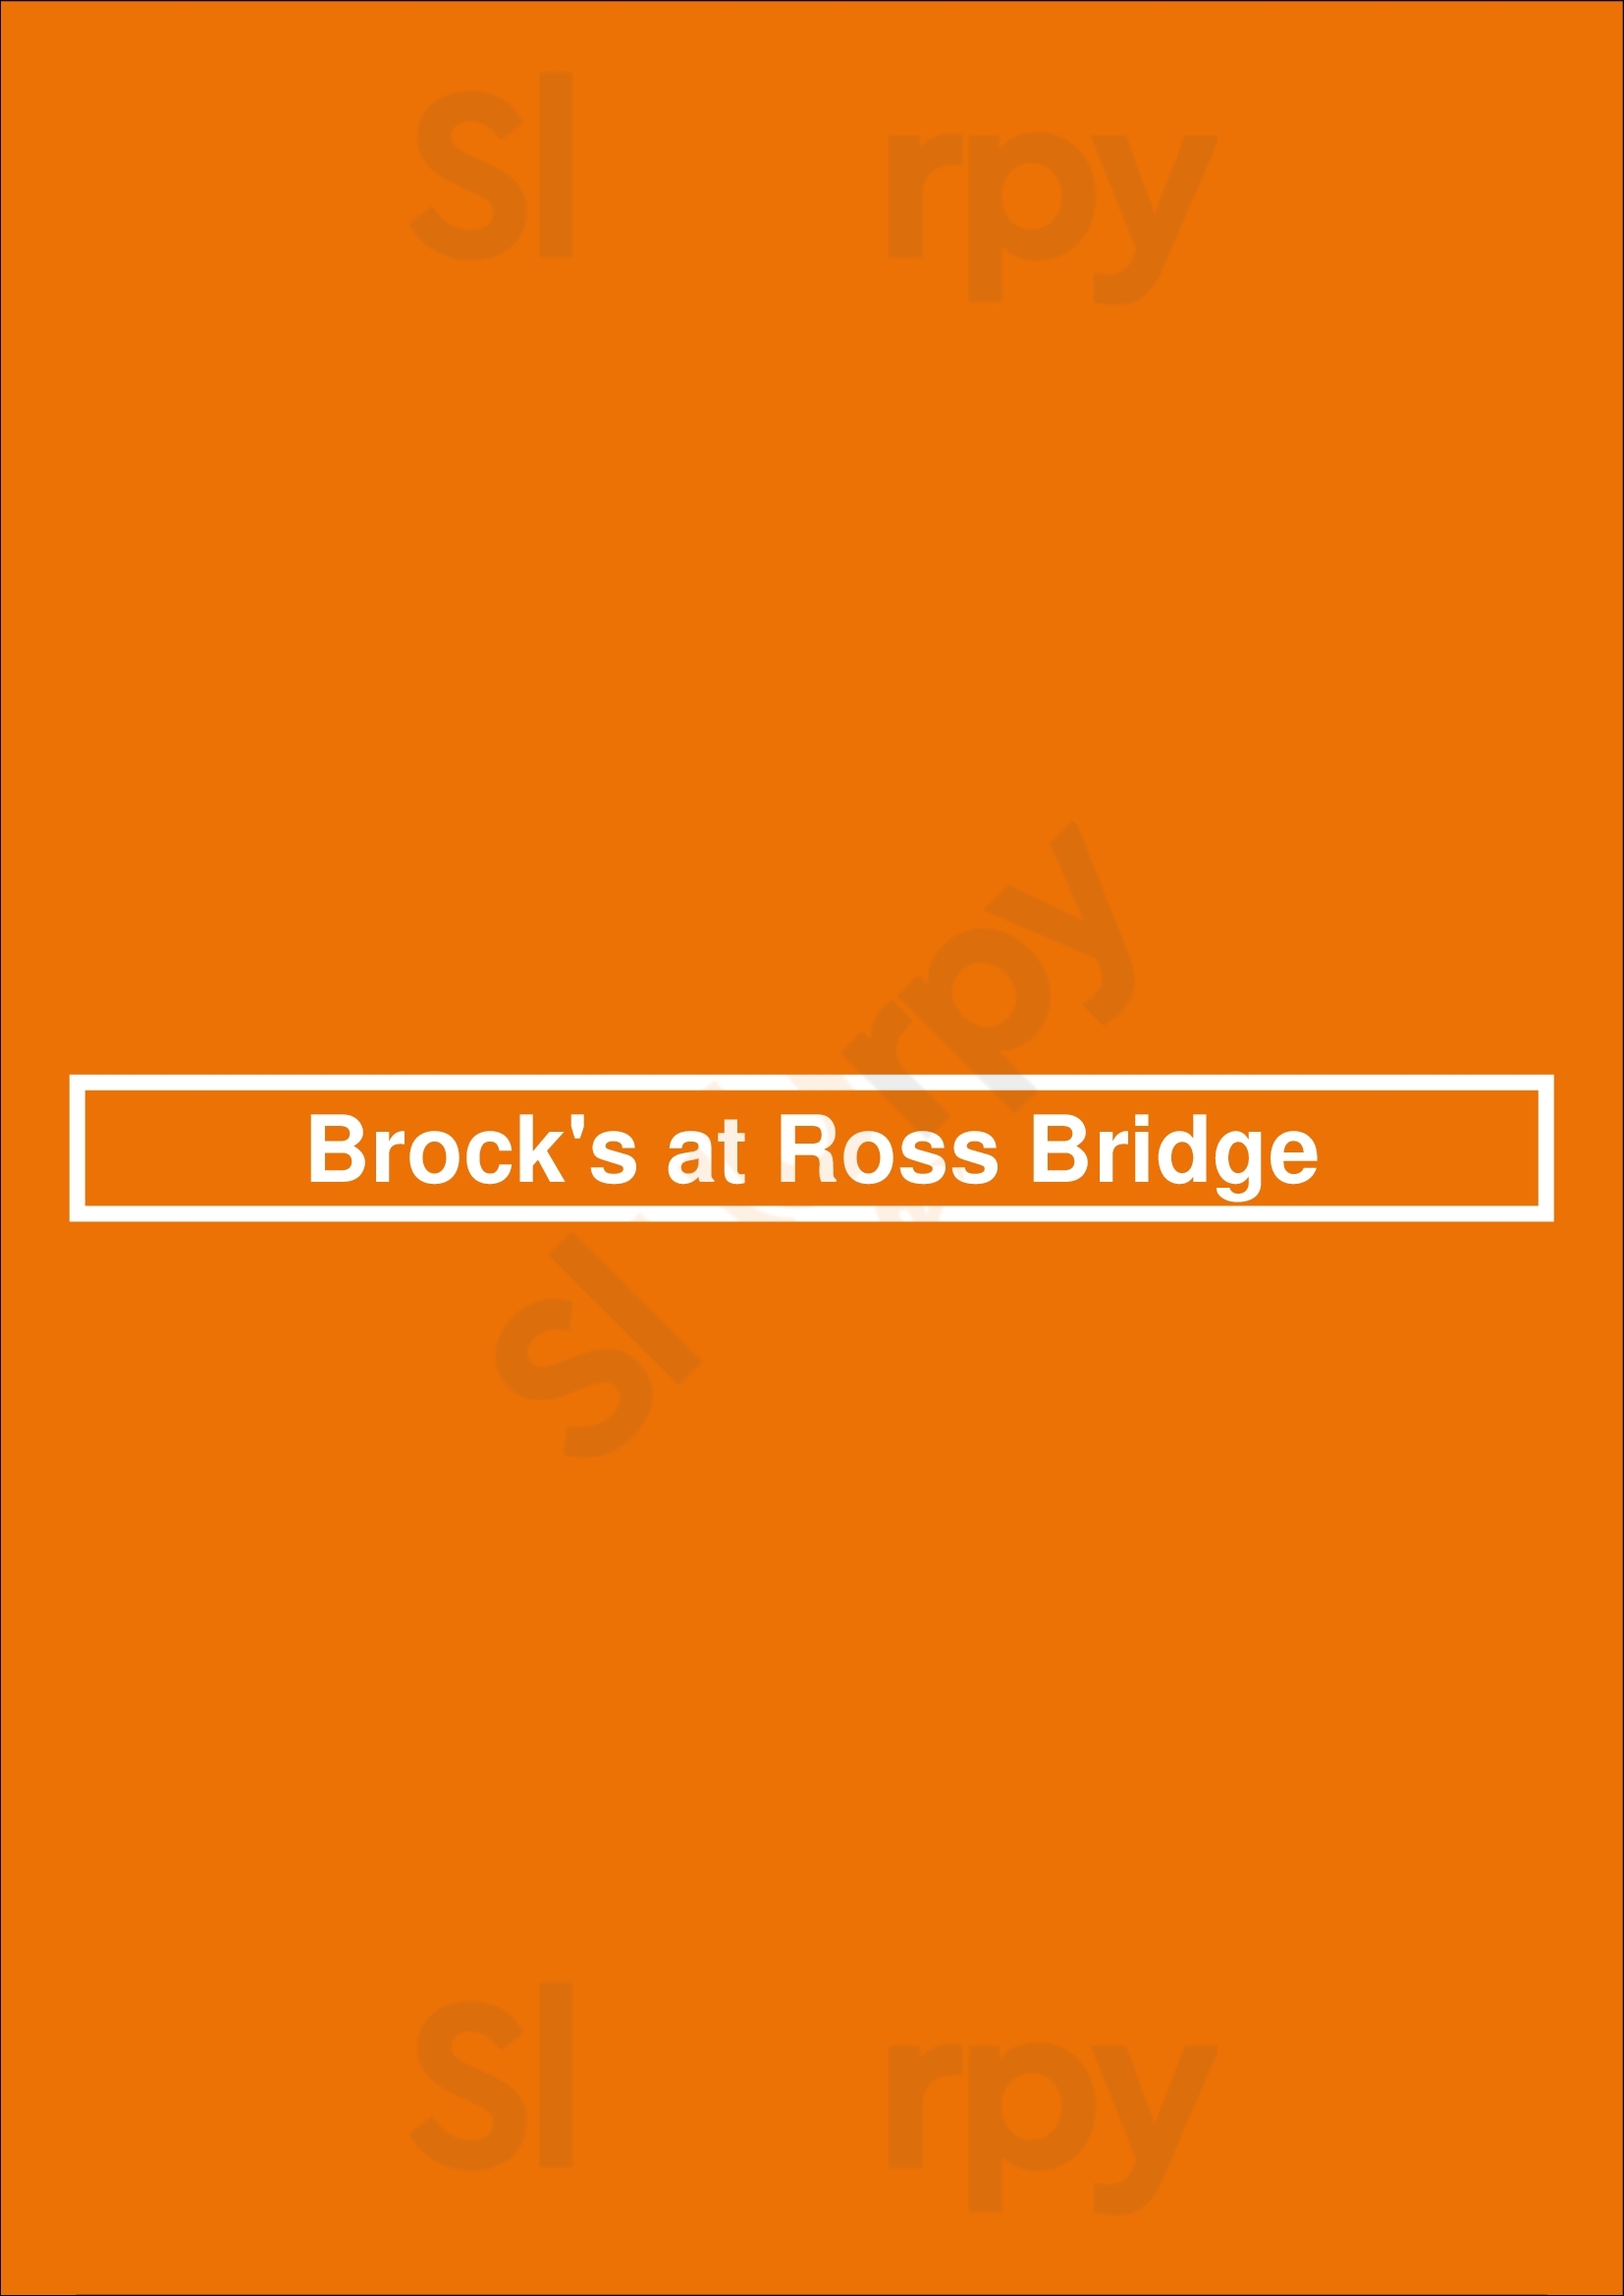 Brock's Restaurant Birmingham Menu - 1